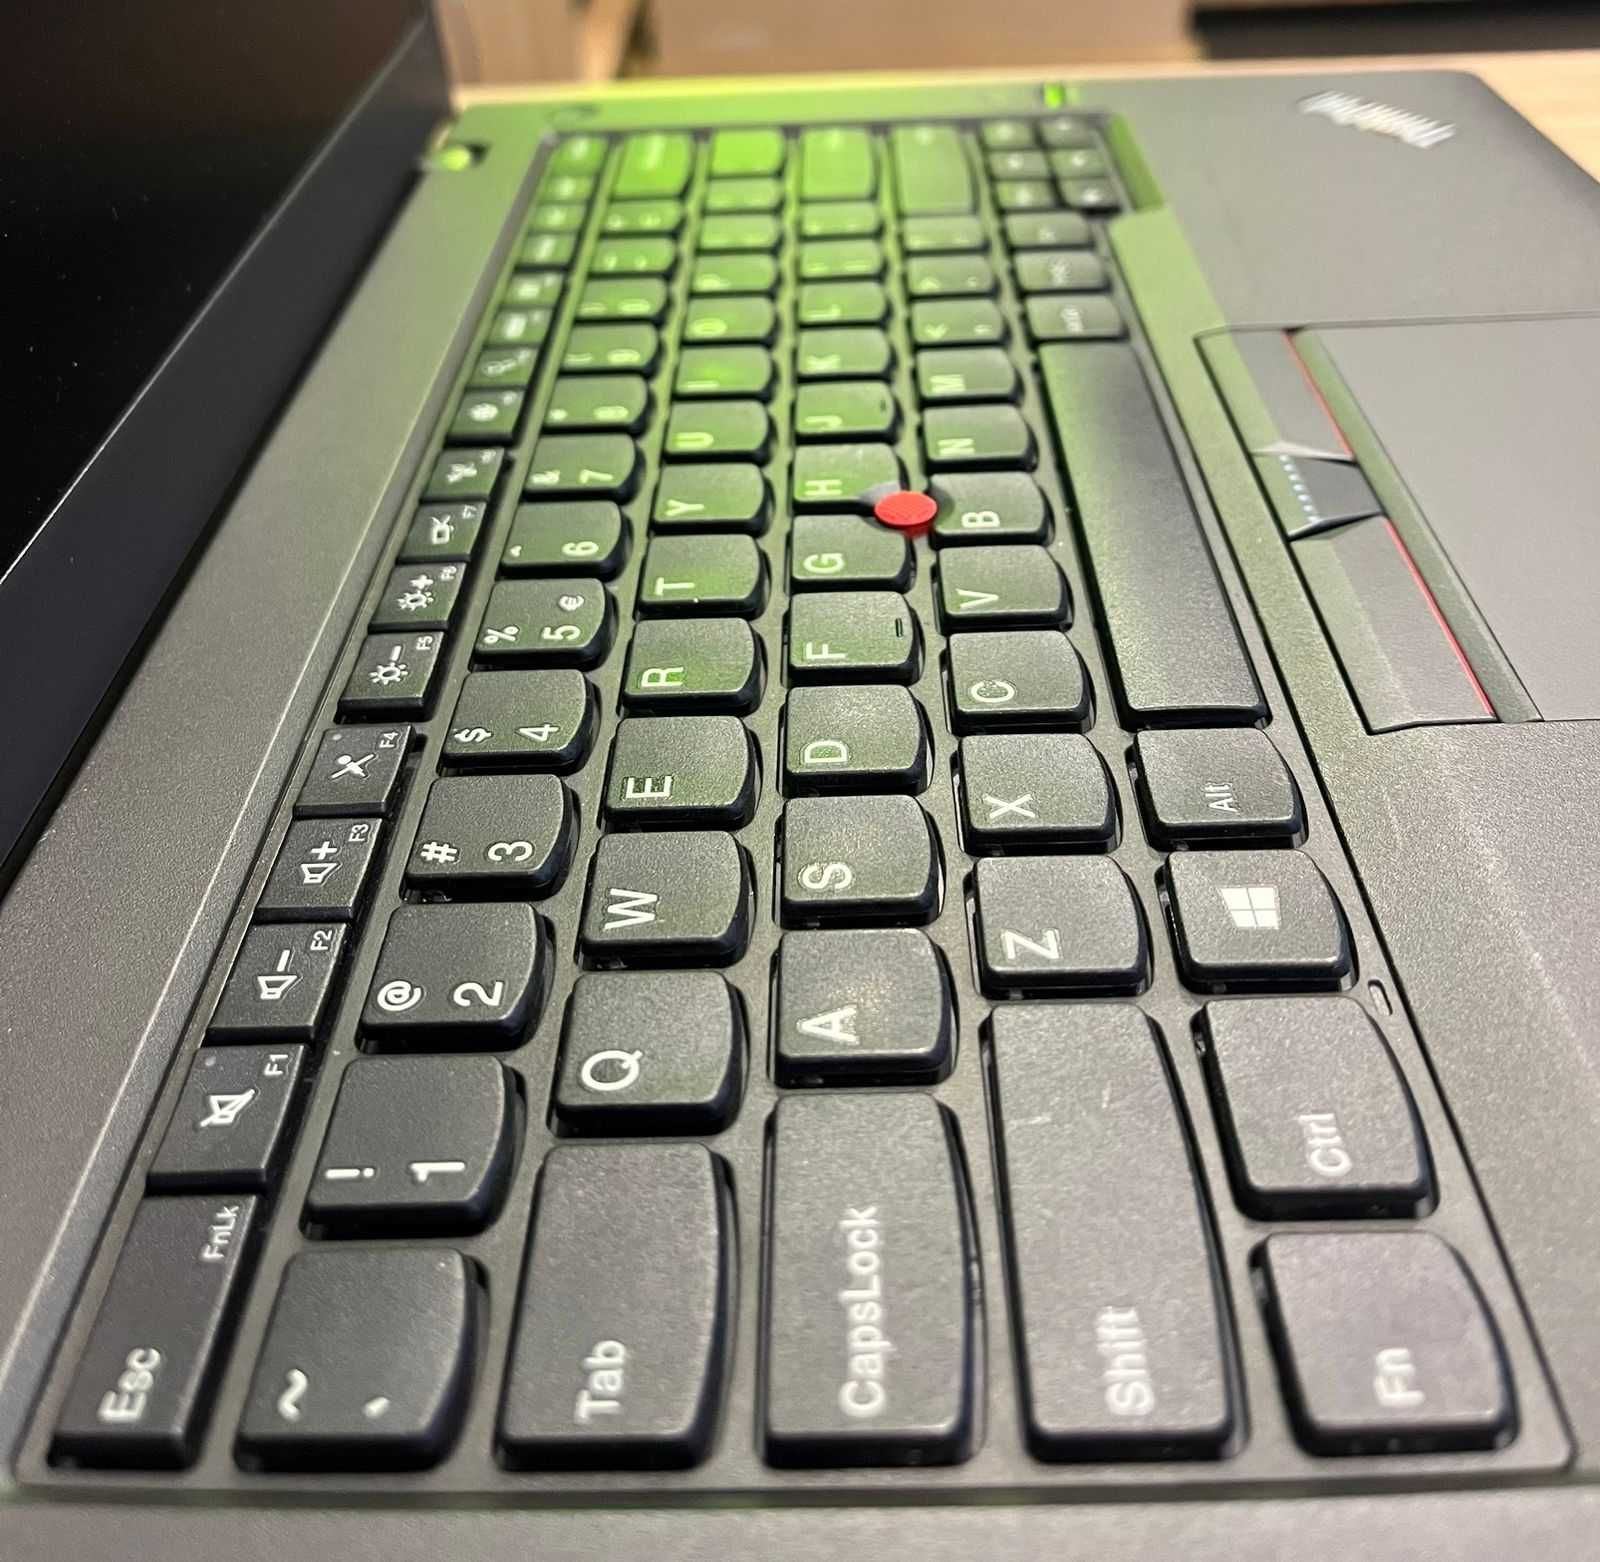 Ноутбук Lenovo ThinkPad T460 (Сore i5 6300U - 2.4/3.0 Ghz 2/4).